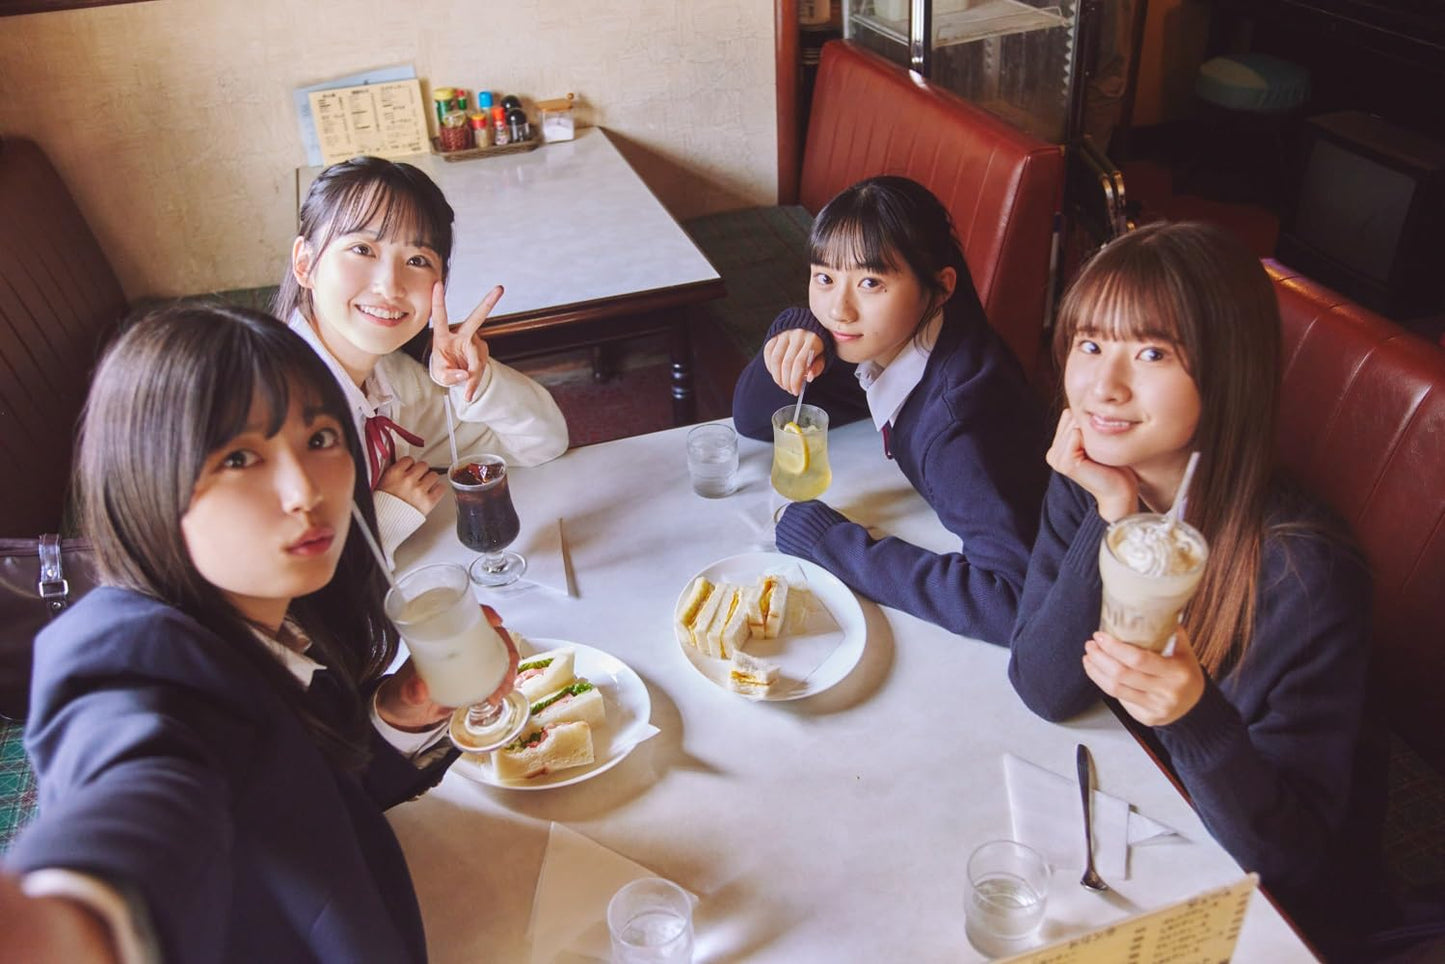 Nogizaka46 5th Generation Photo Book